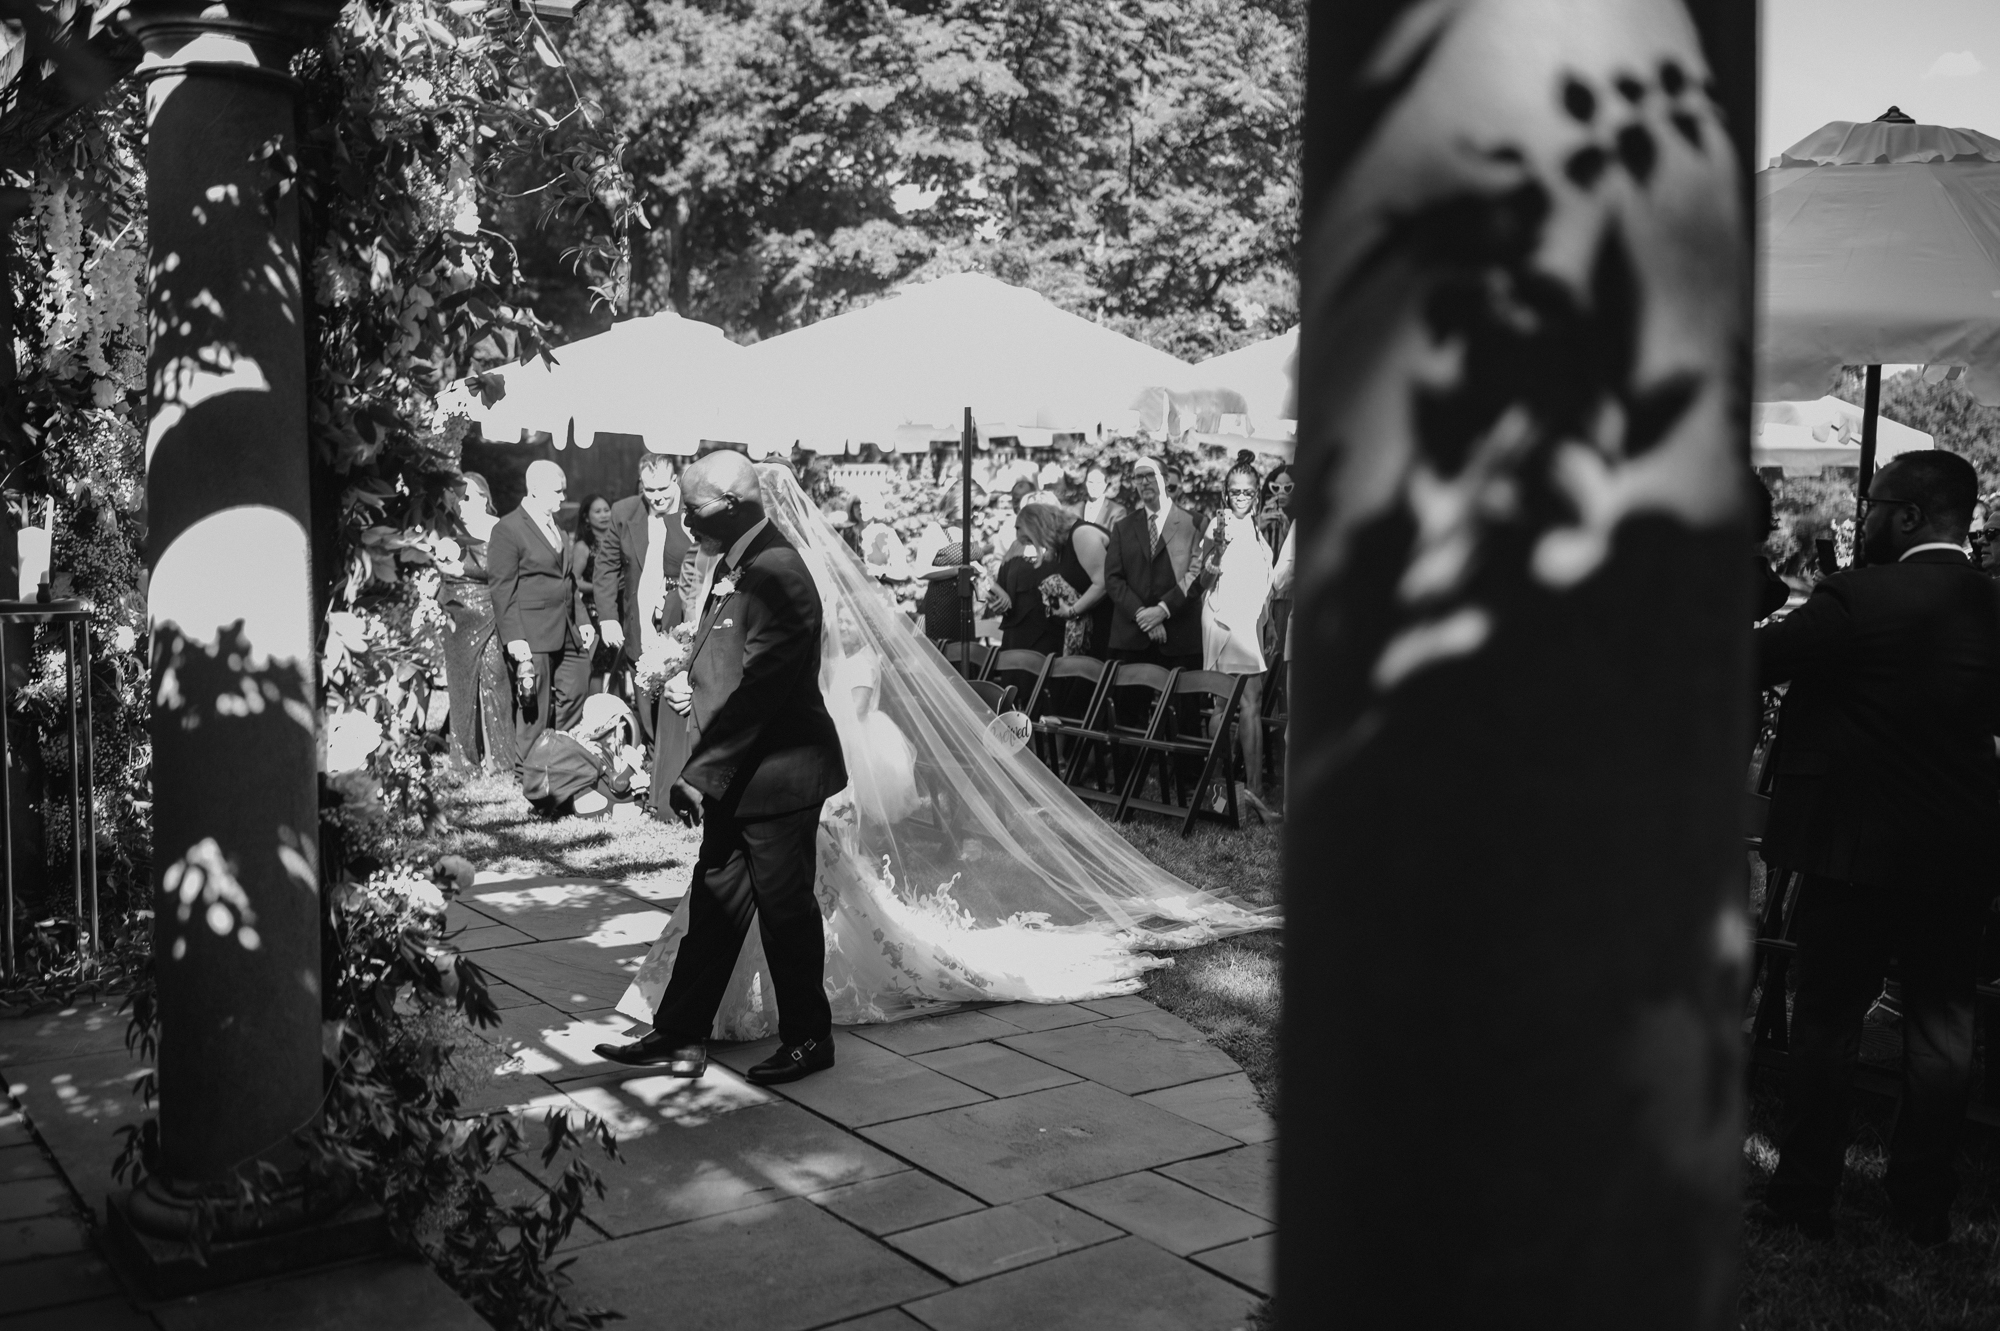 curtis arboretum wedding photography pennsylvania 01 61